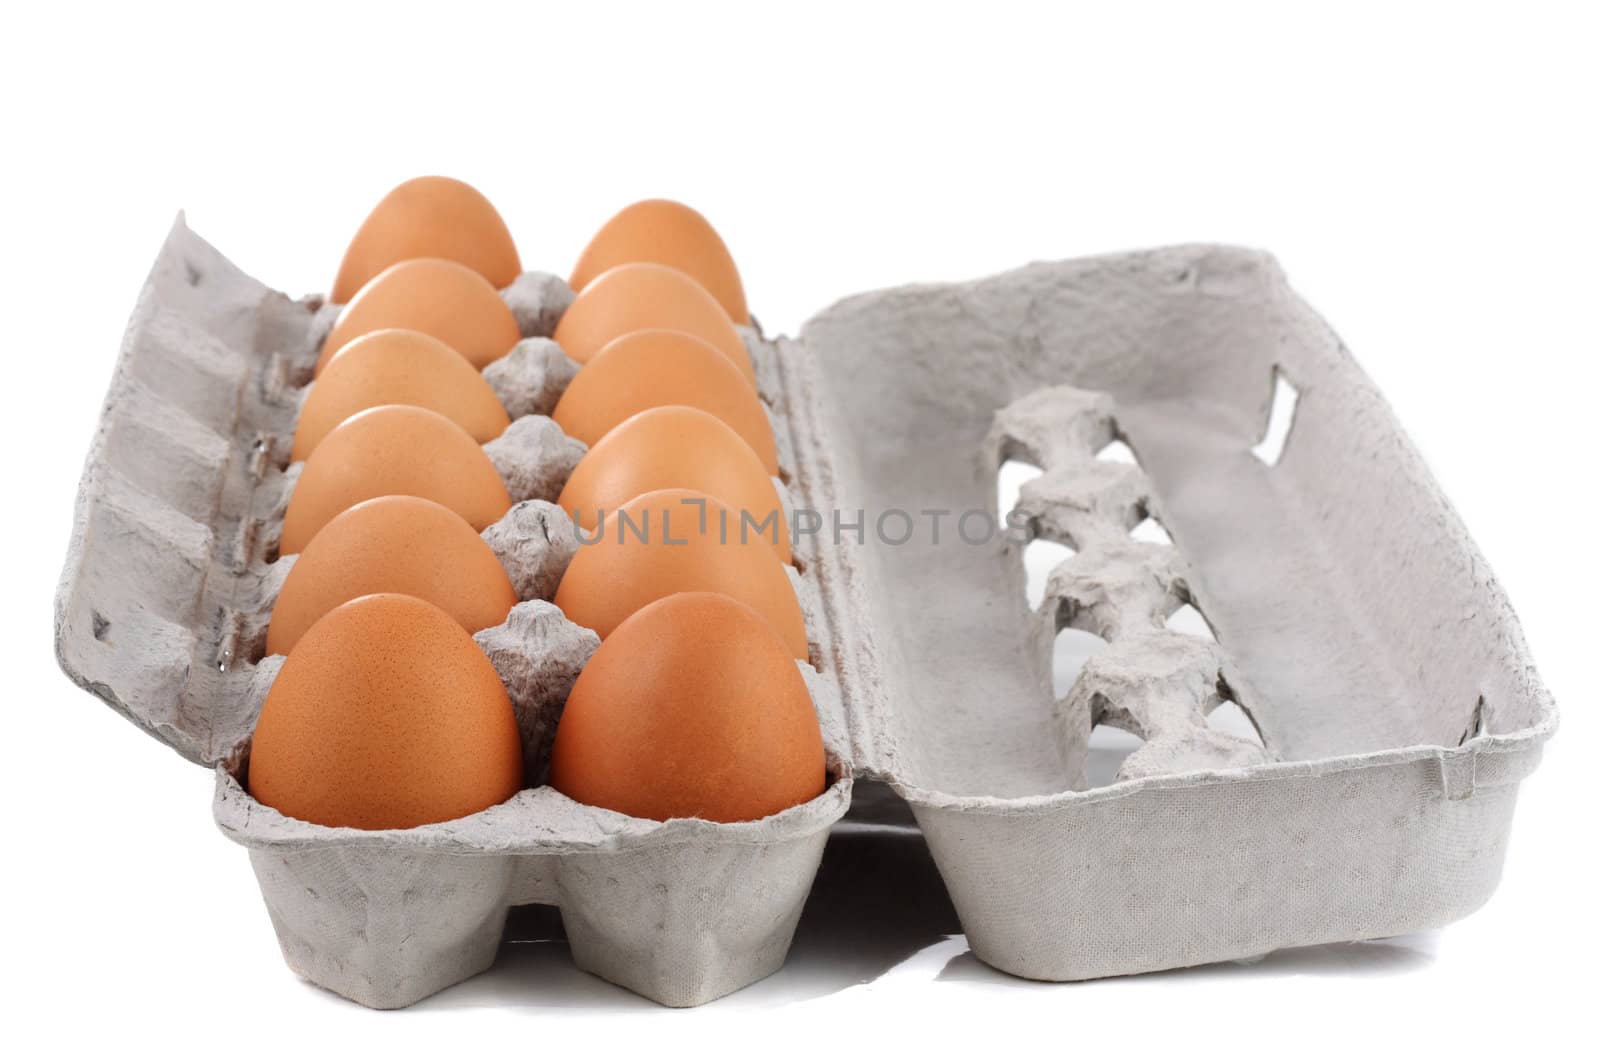 dozen of fresh brown eggs on container